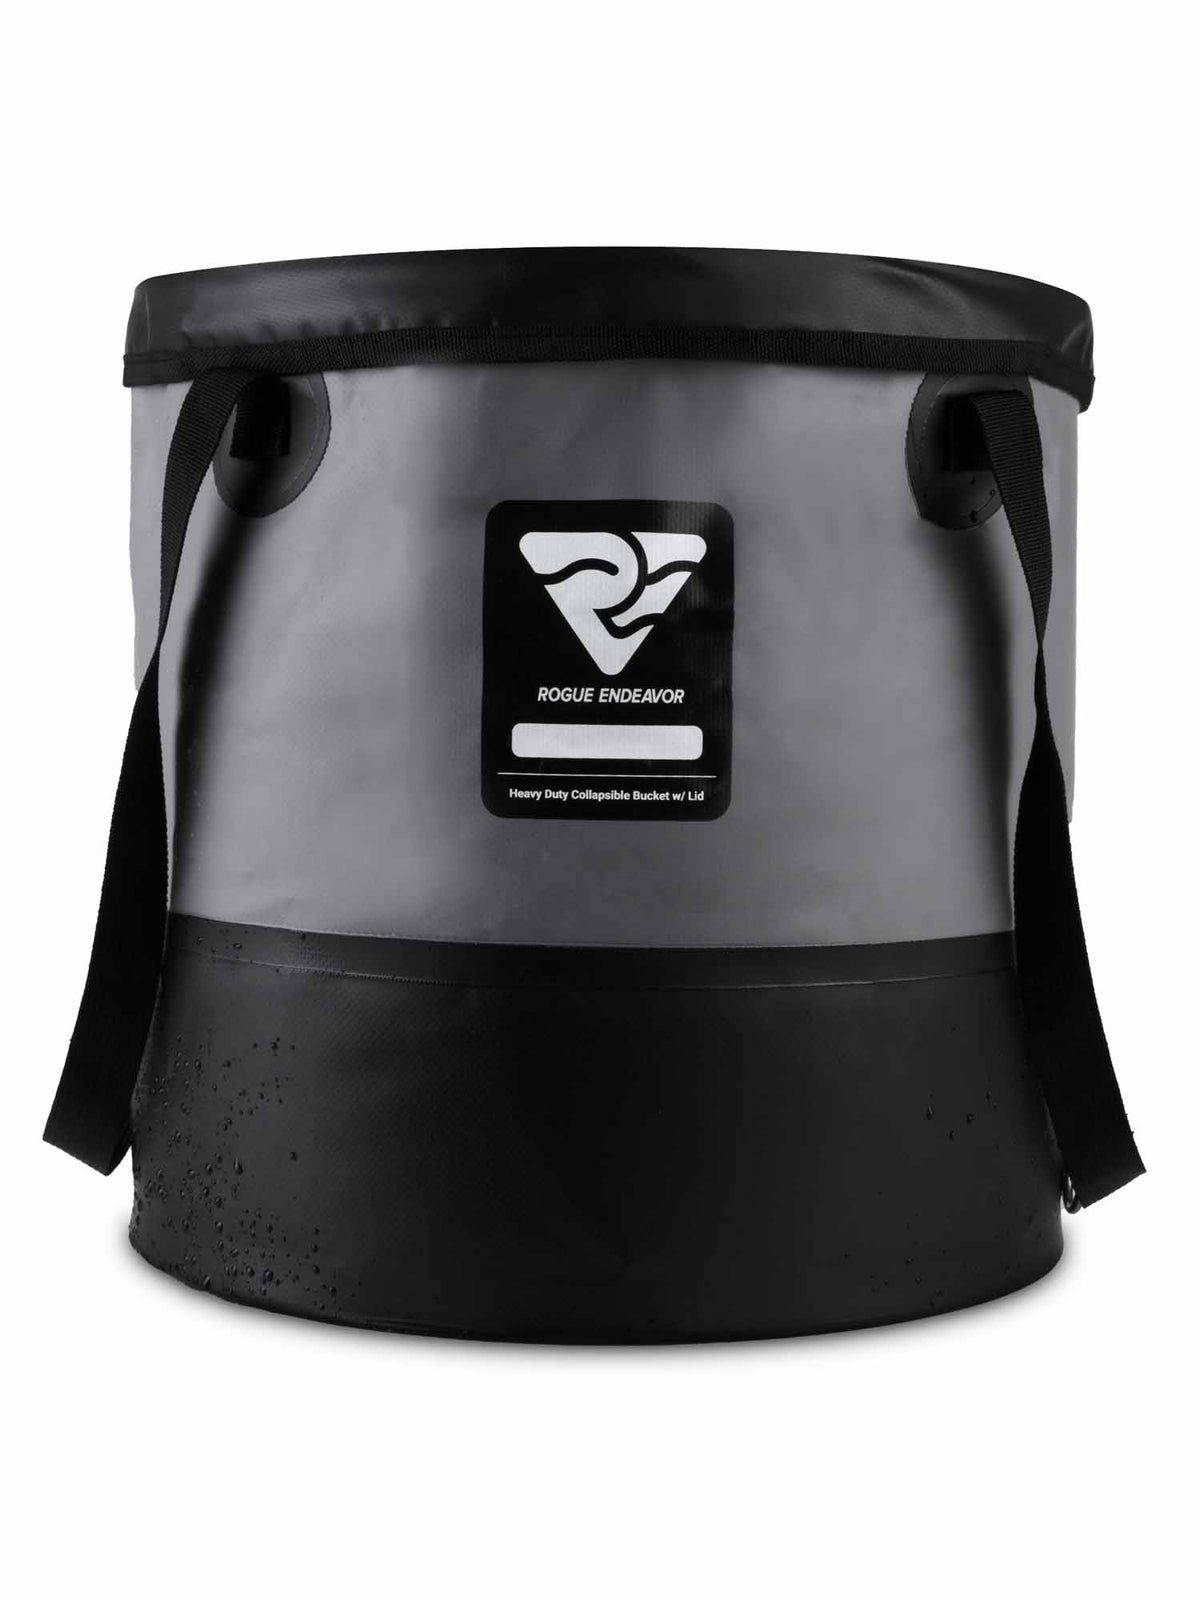 Collapsible Bucket w/ Lid (5 Gallon) - RogueEndeavor